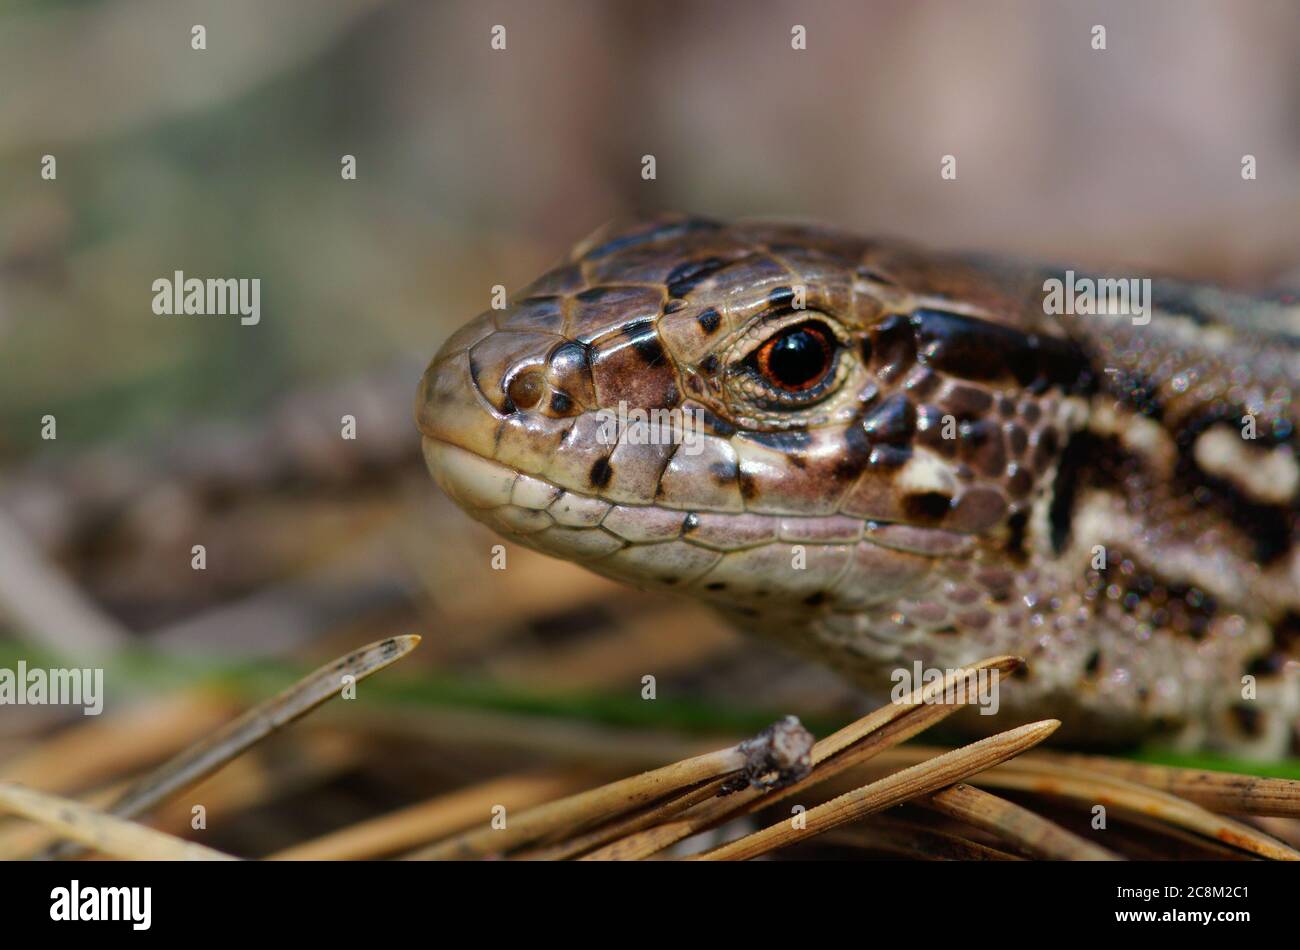 Close up of a lizard's head, macro photo of a sand lizard (Lacerta agilis) Stock Photo